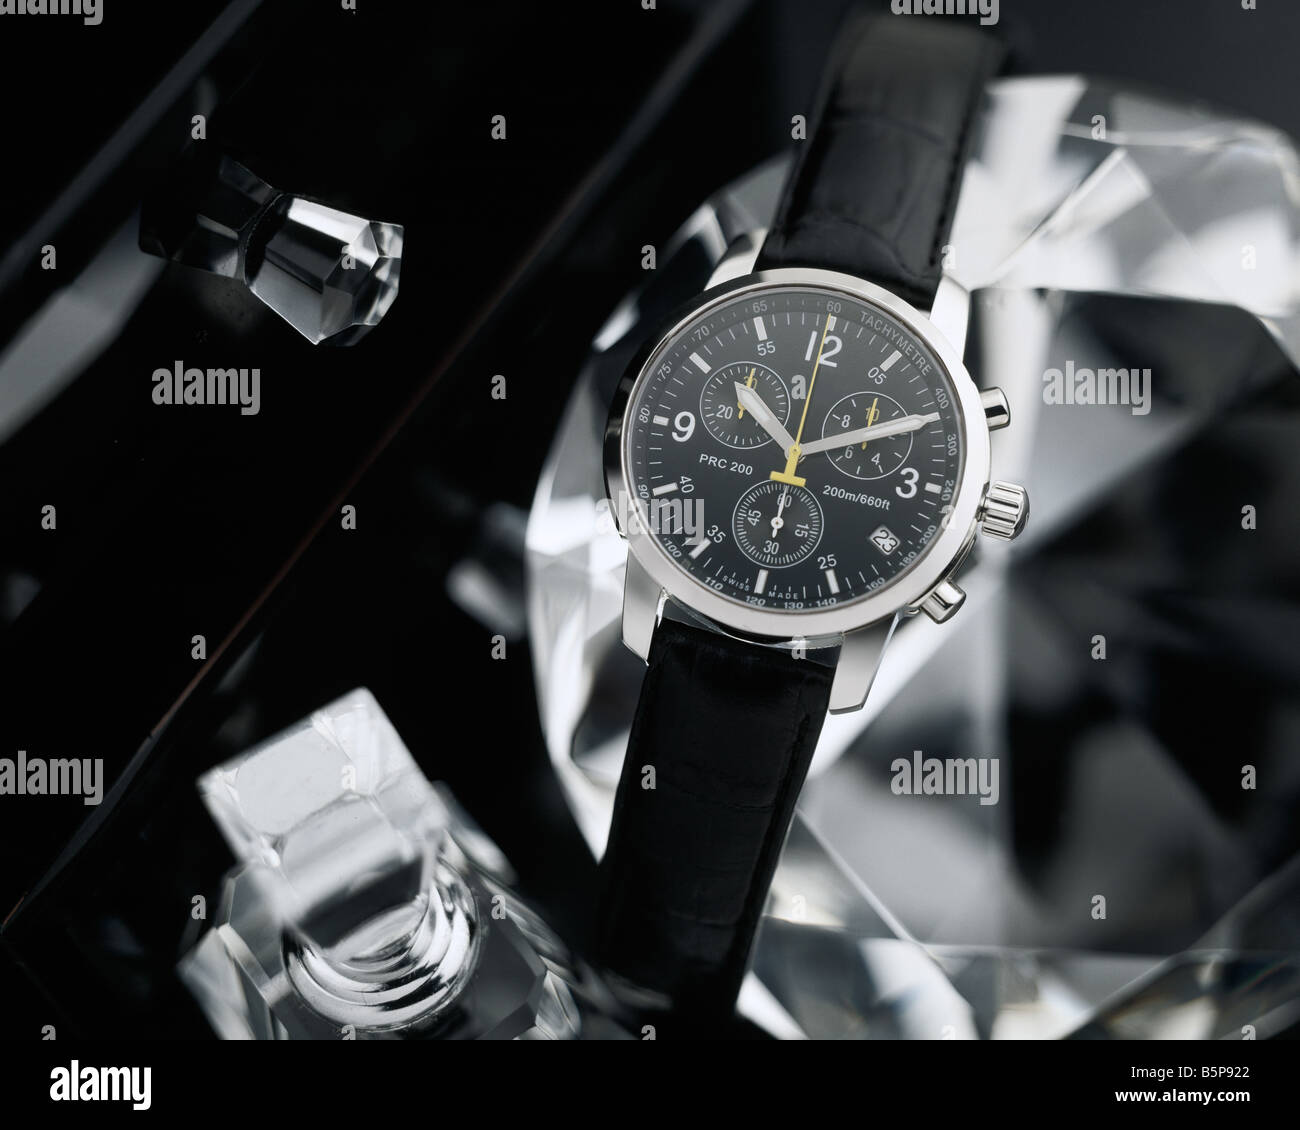 Lifestyle image of a luxury wristwatch. Stock Photo